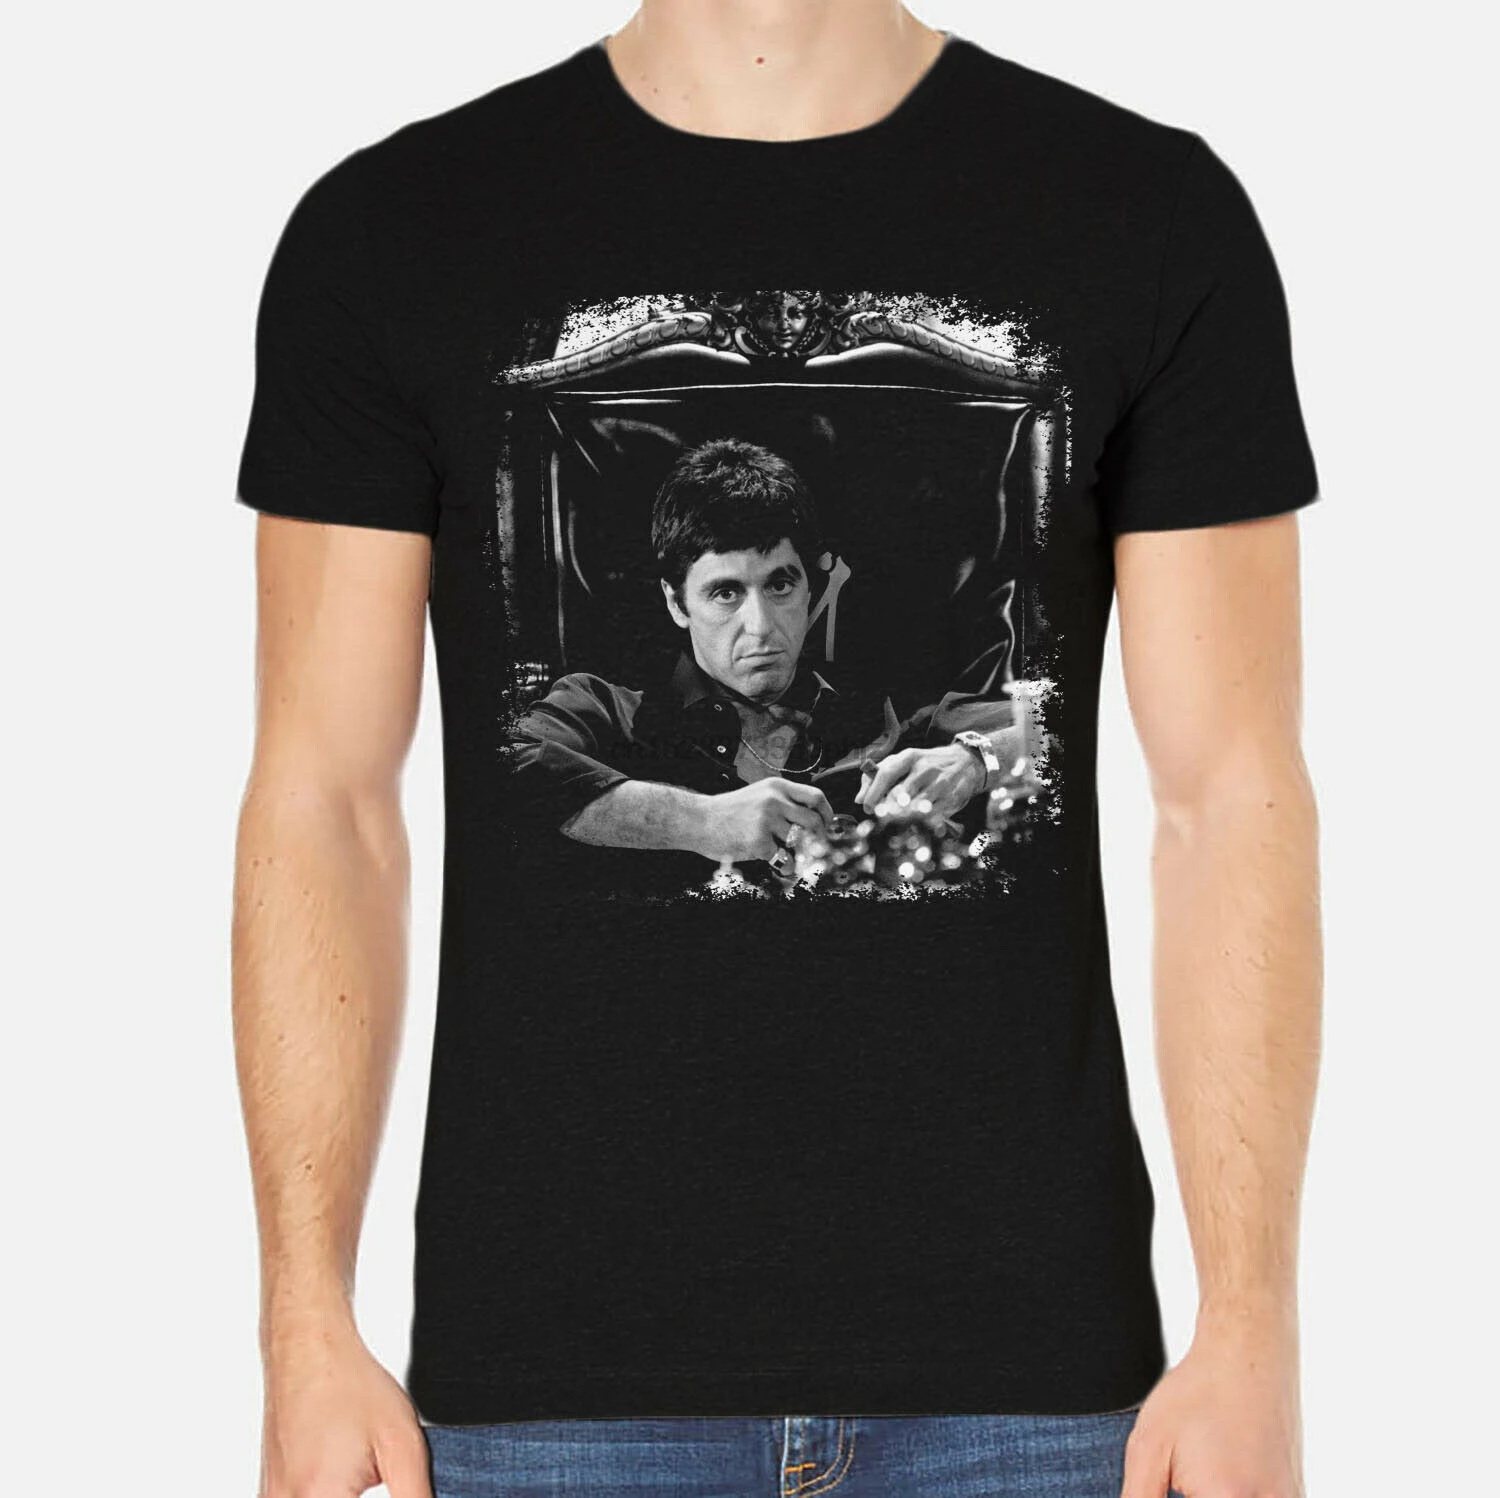 

Al Pacino Tony Montana Scarface Celebrities Men T-Shirt Tee Clothing 2019 New 100% Cotton T Shirts Men Top Tee Plus Size